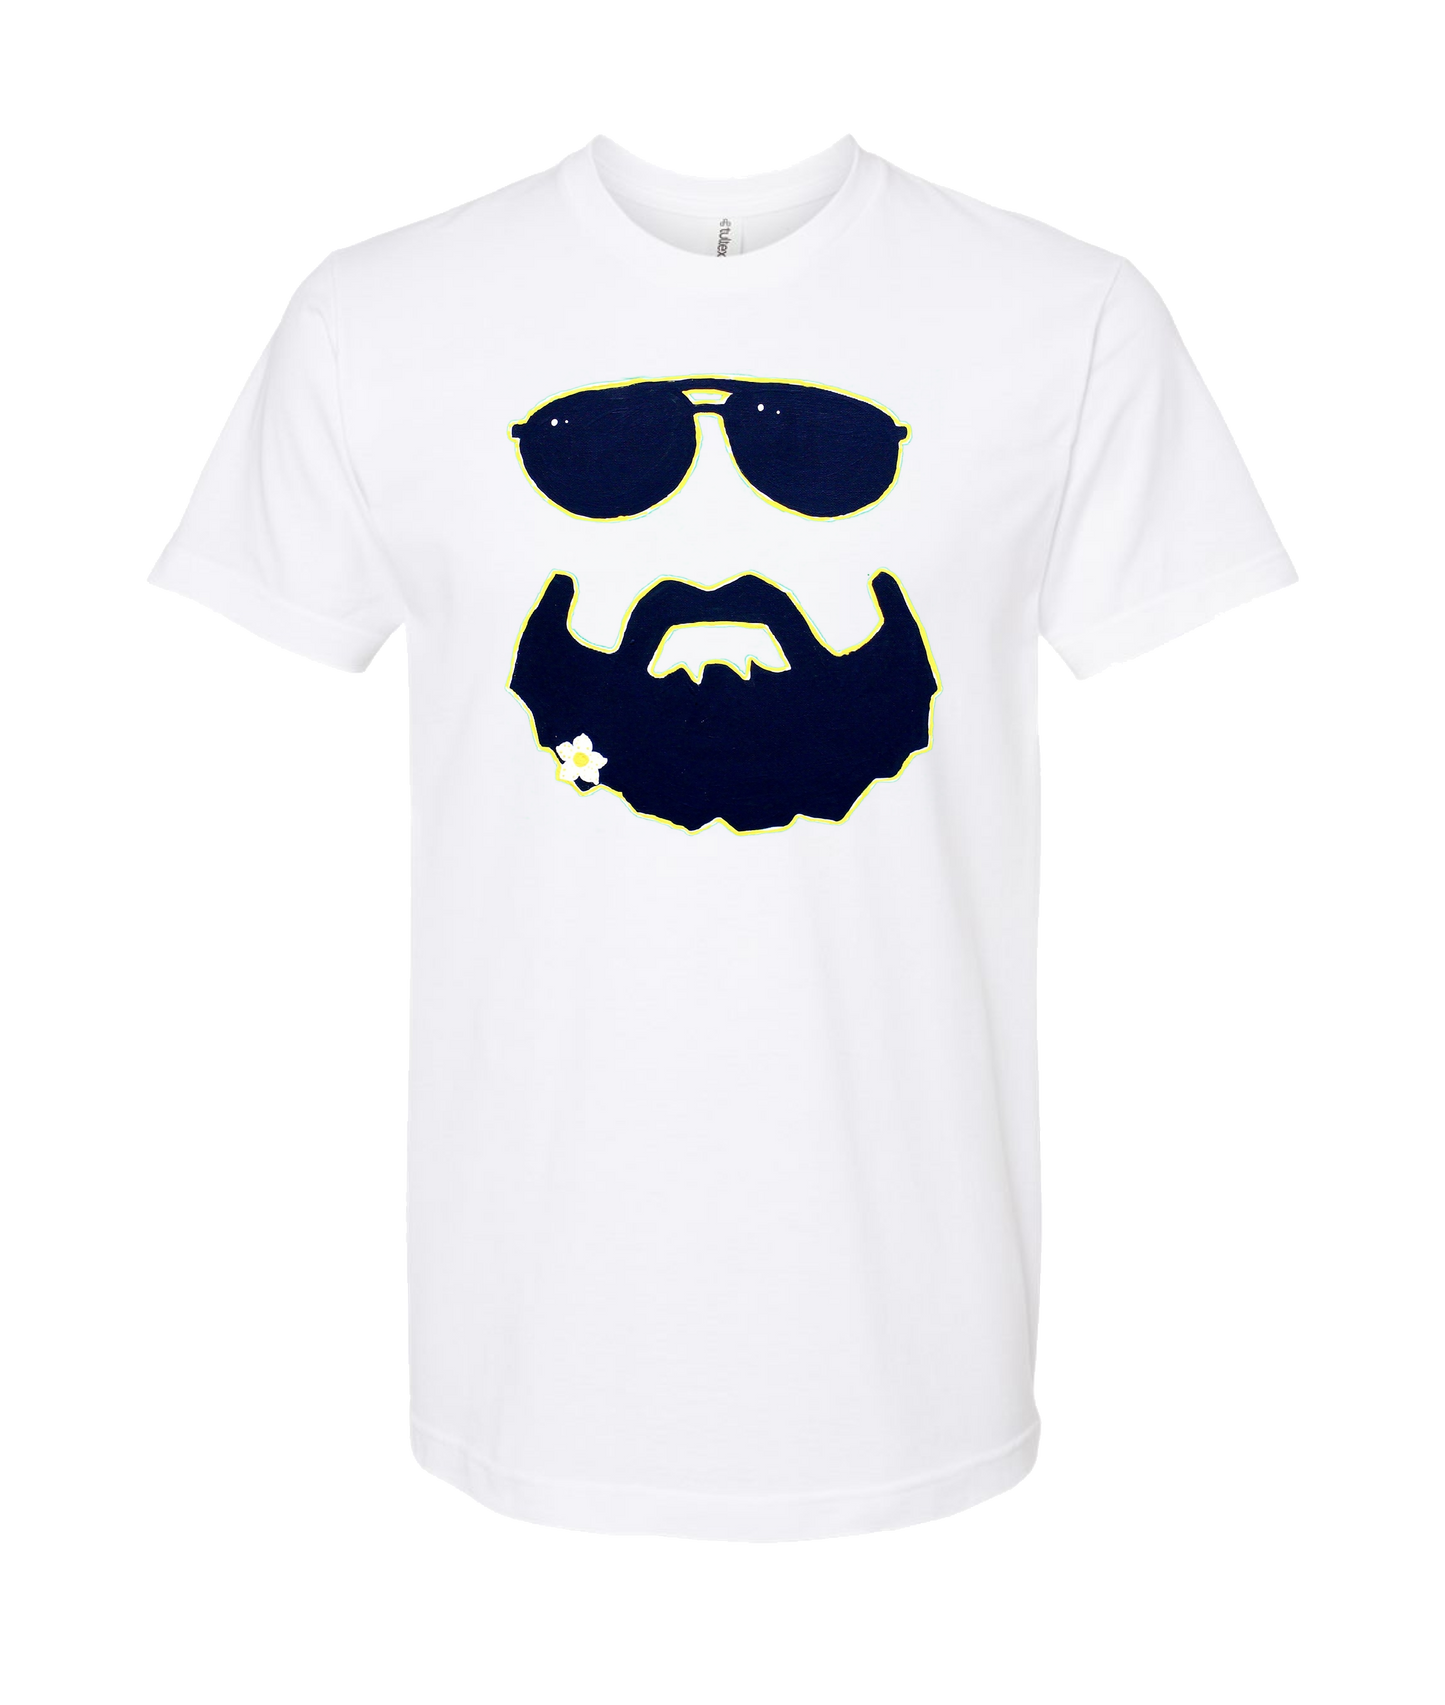 Wook Wranglers - Wook - White T Shirt